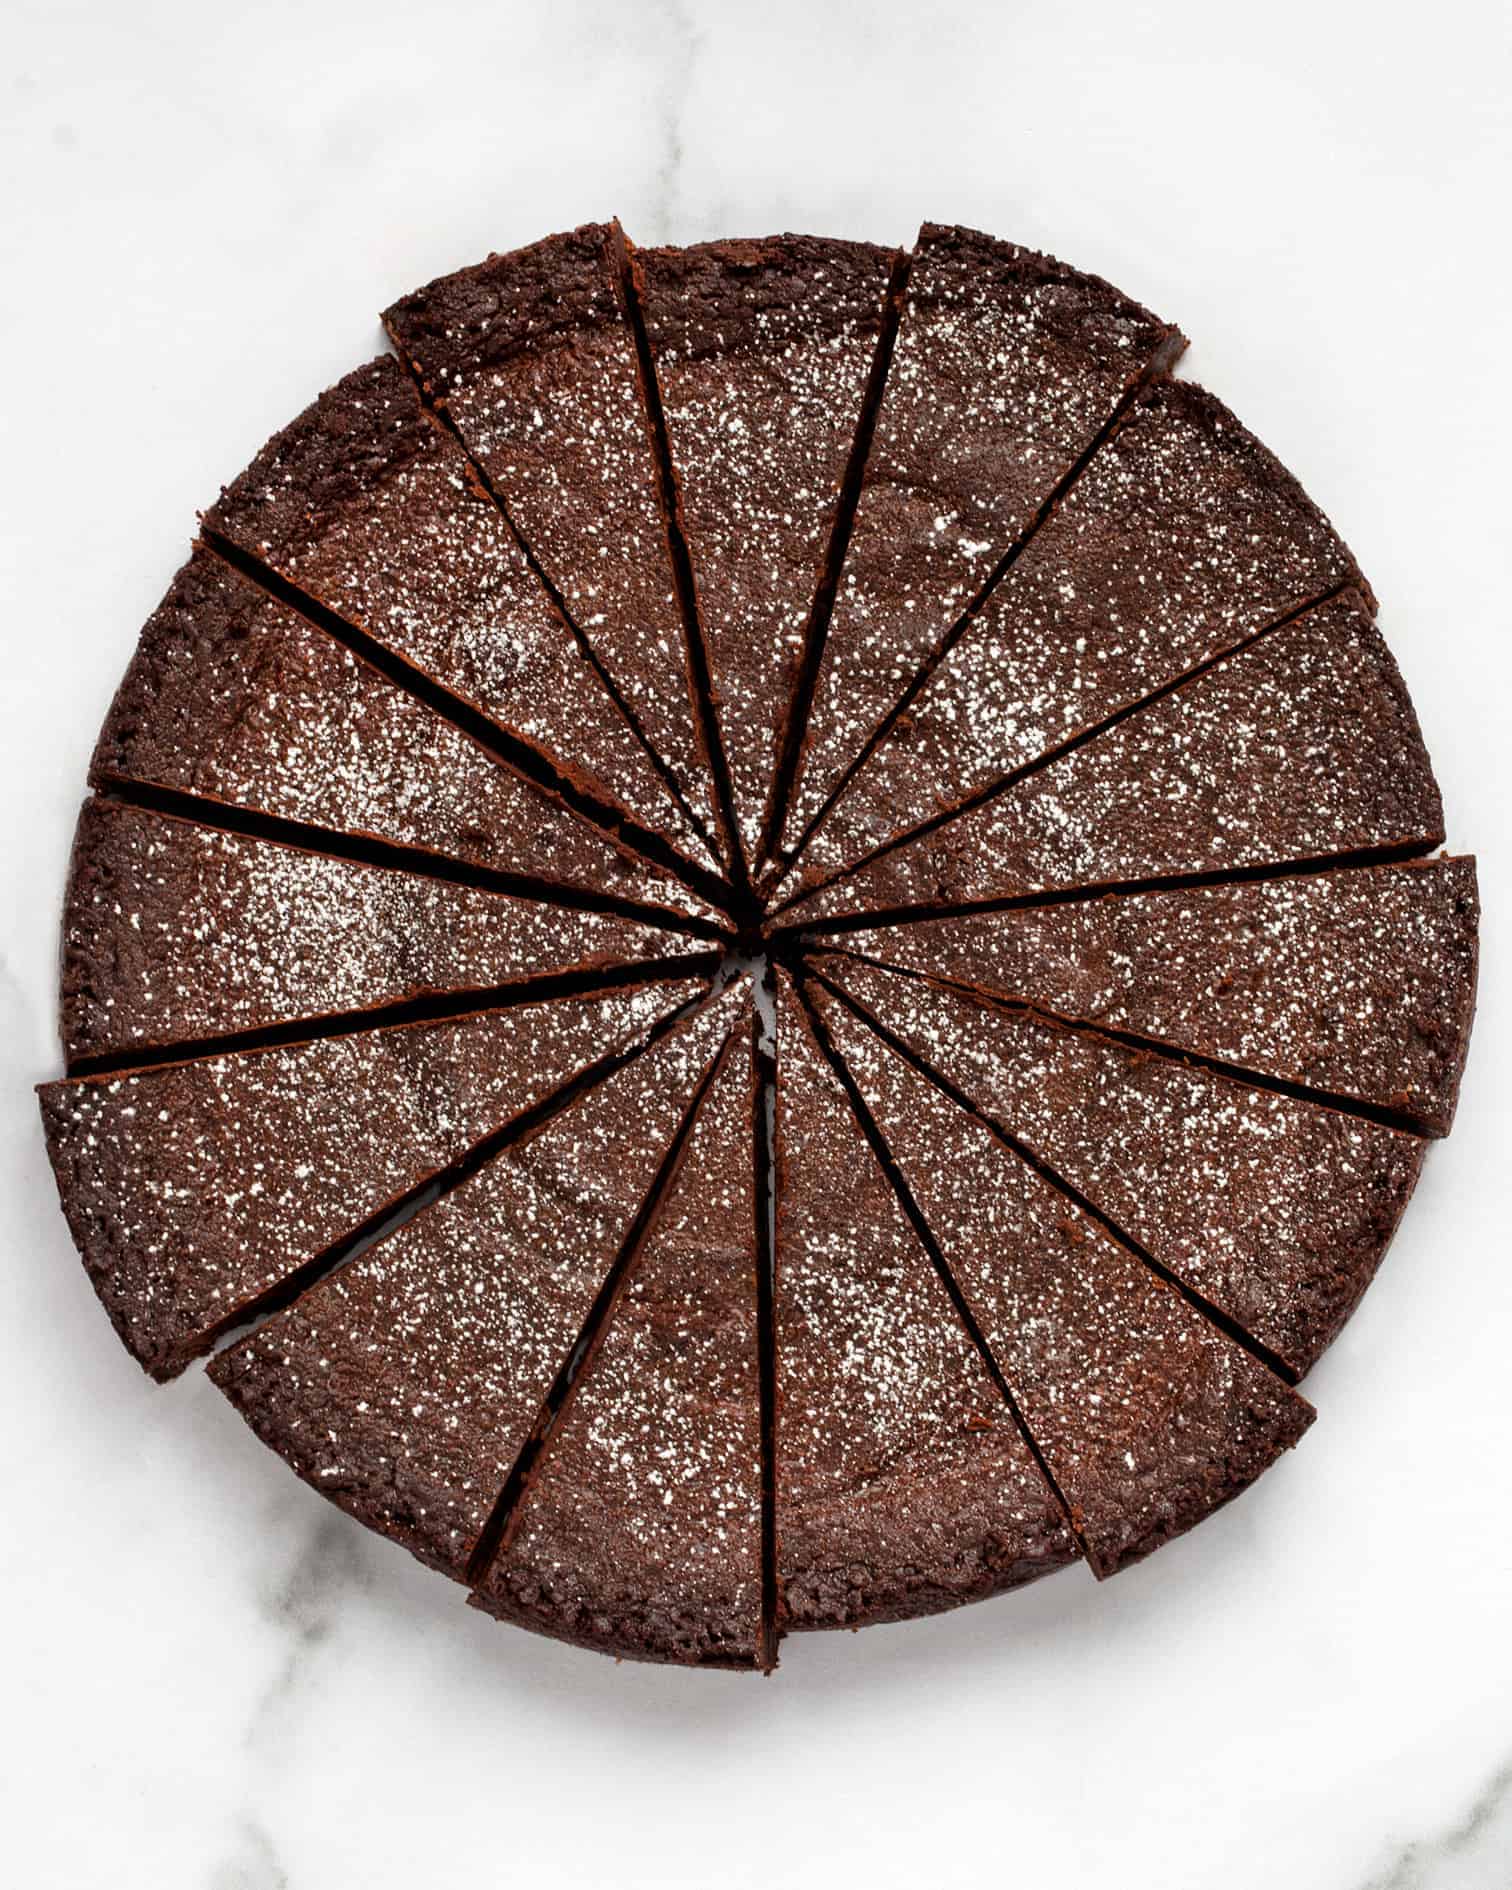 15-Minute Chocolate Cake Sliced